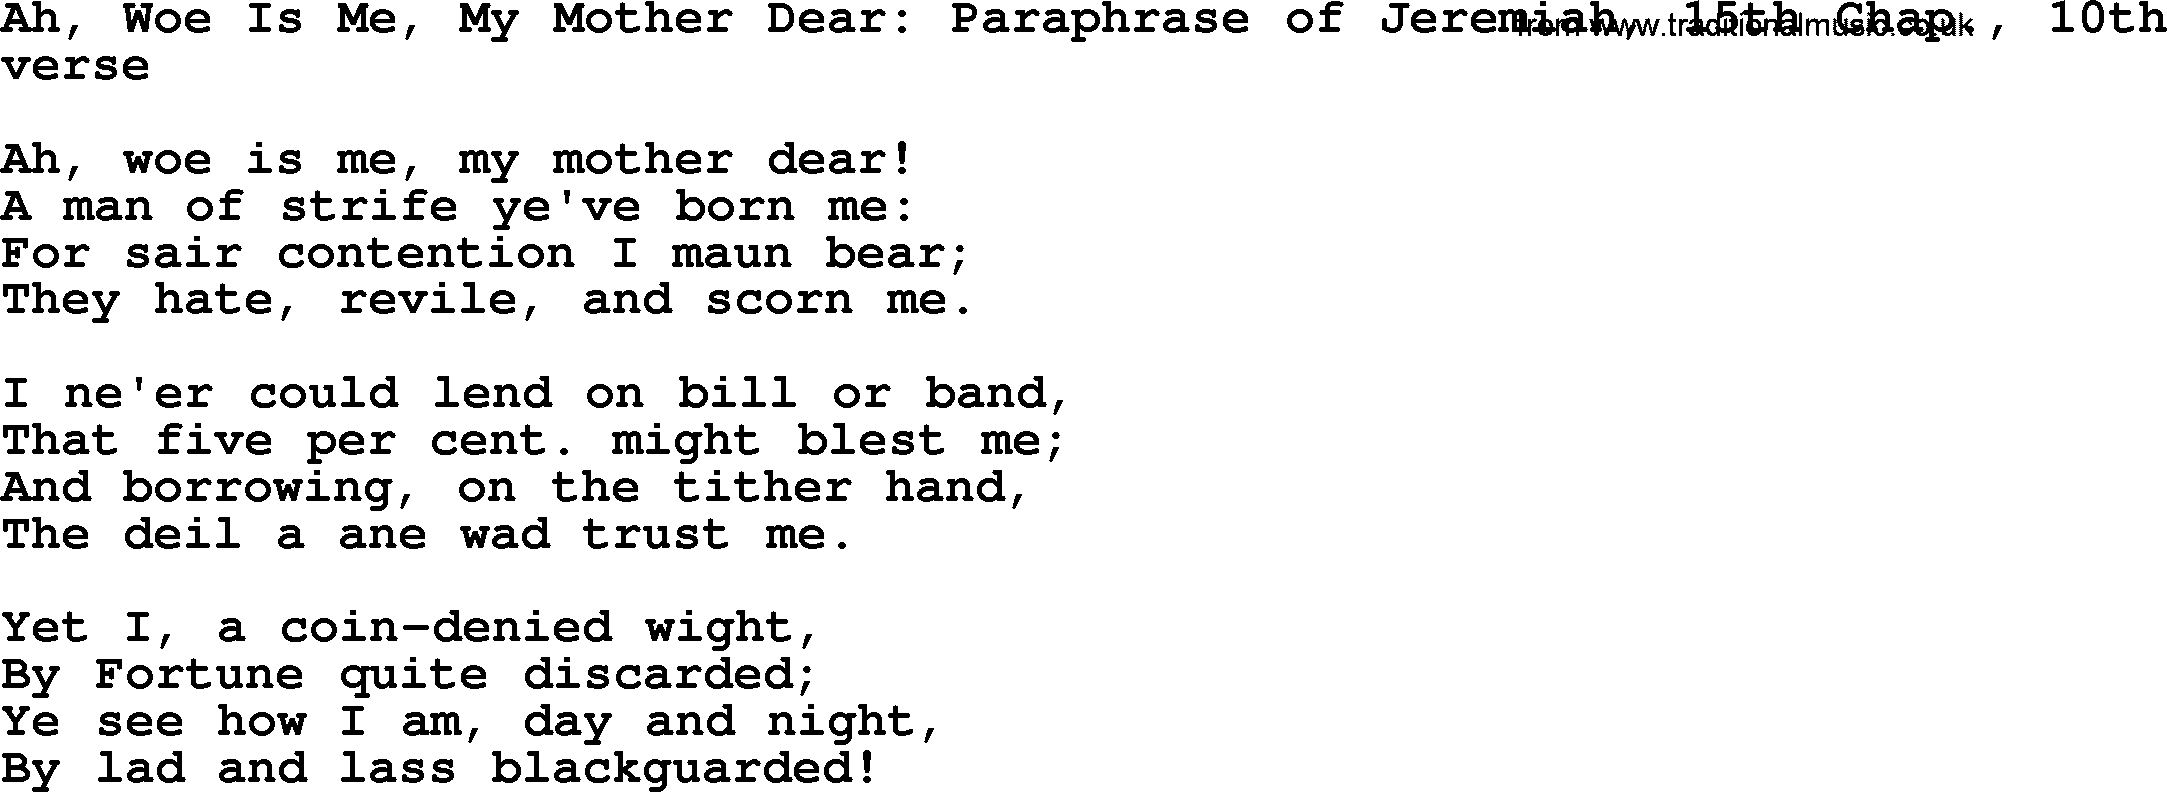 Robert Burns Songs & Lyrics: Ah, Woe Is Me, My Mother Dear Paraphrase Of Jeremiah